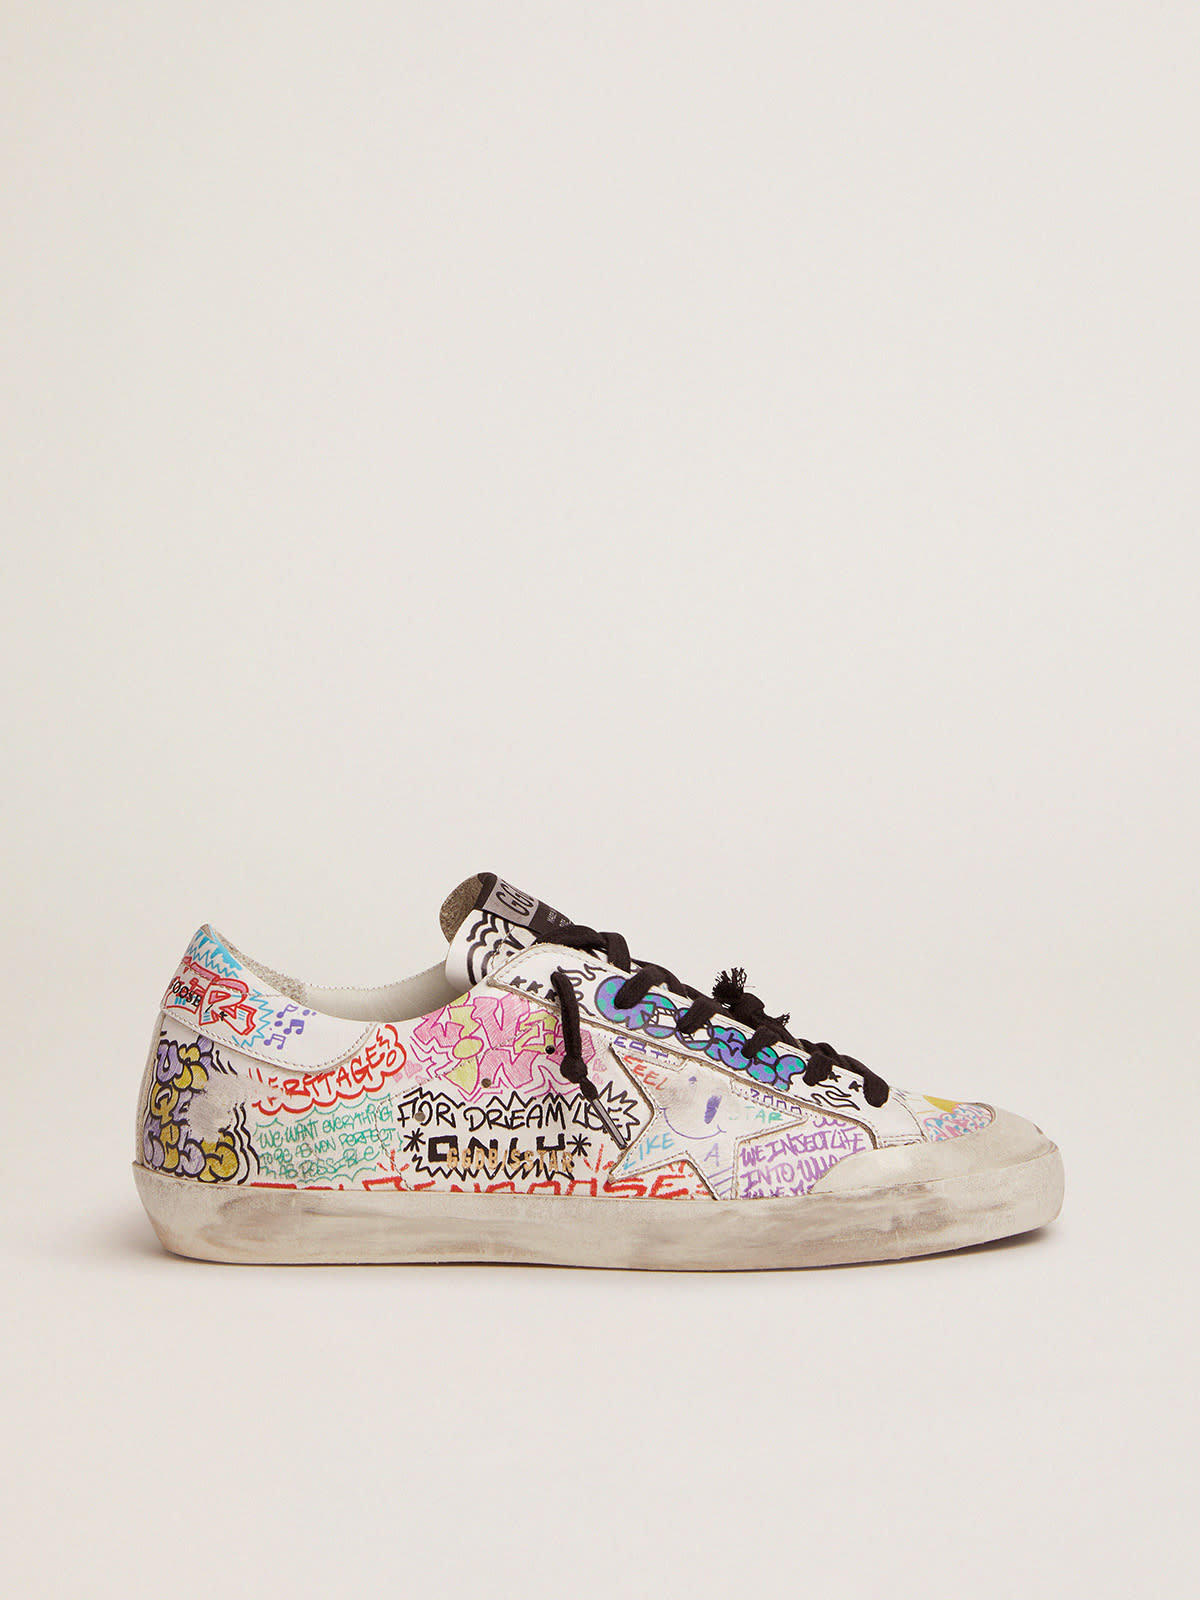 Super-Star sneakers in white leather with multicolored graffiti print